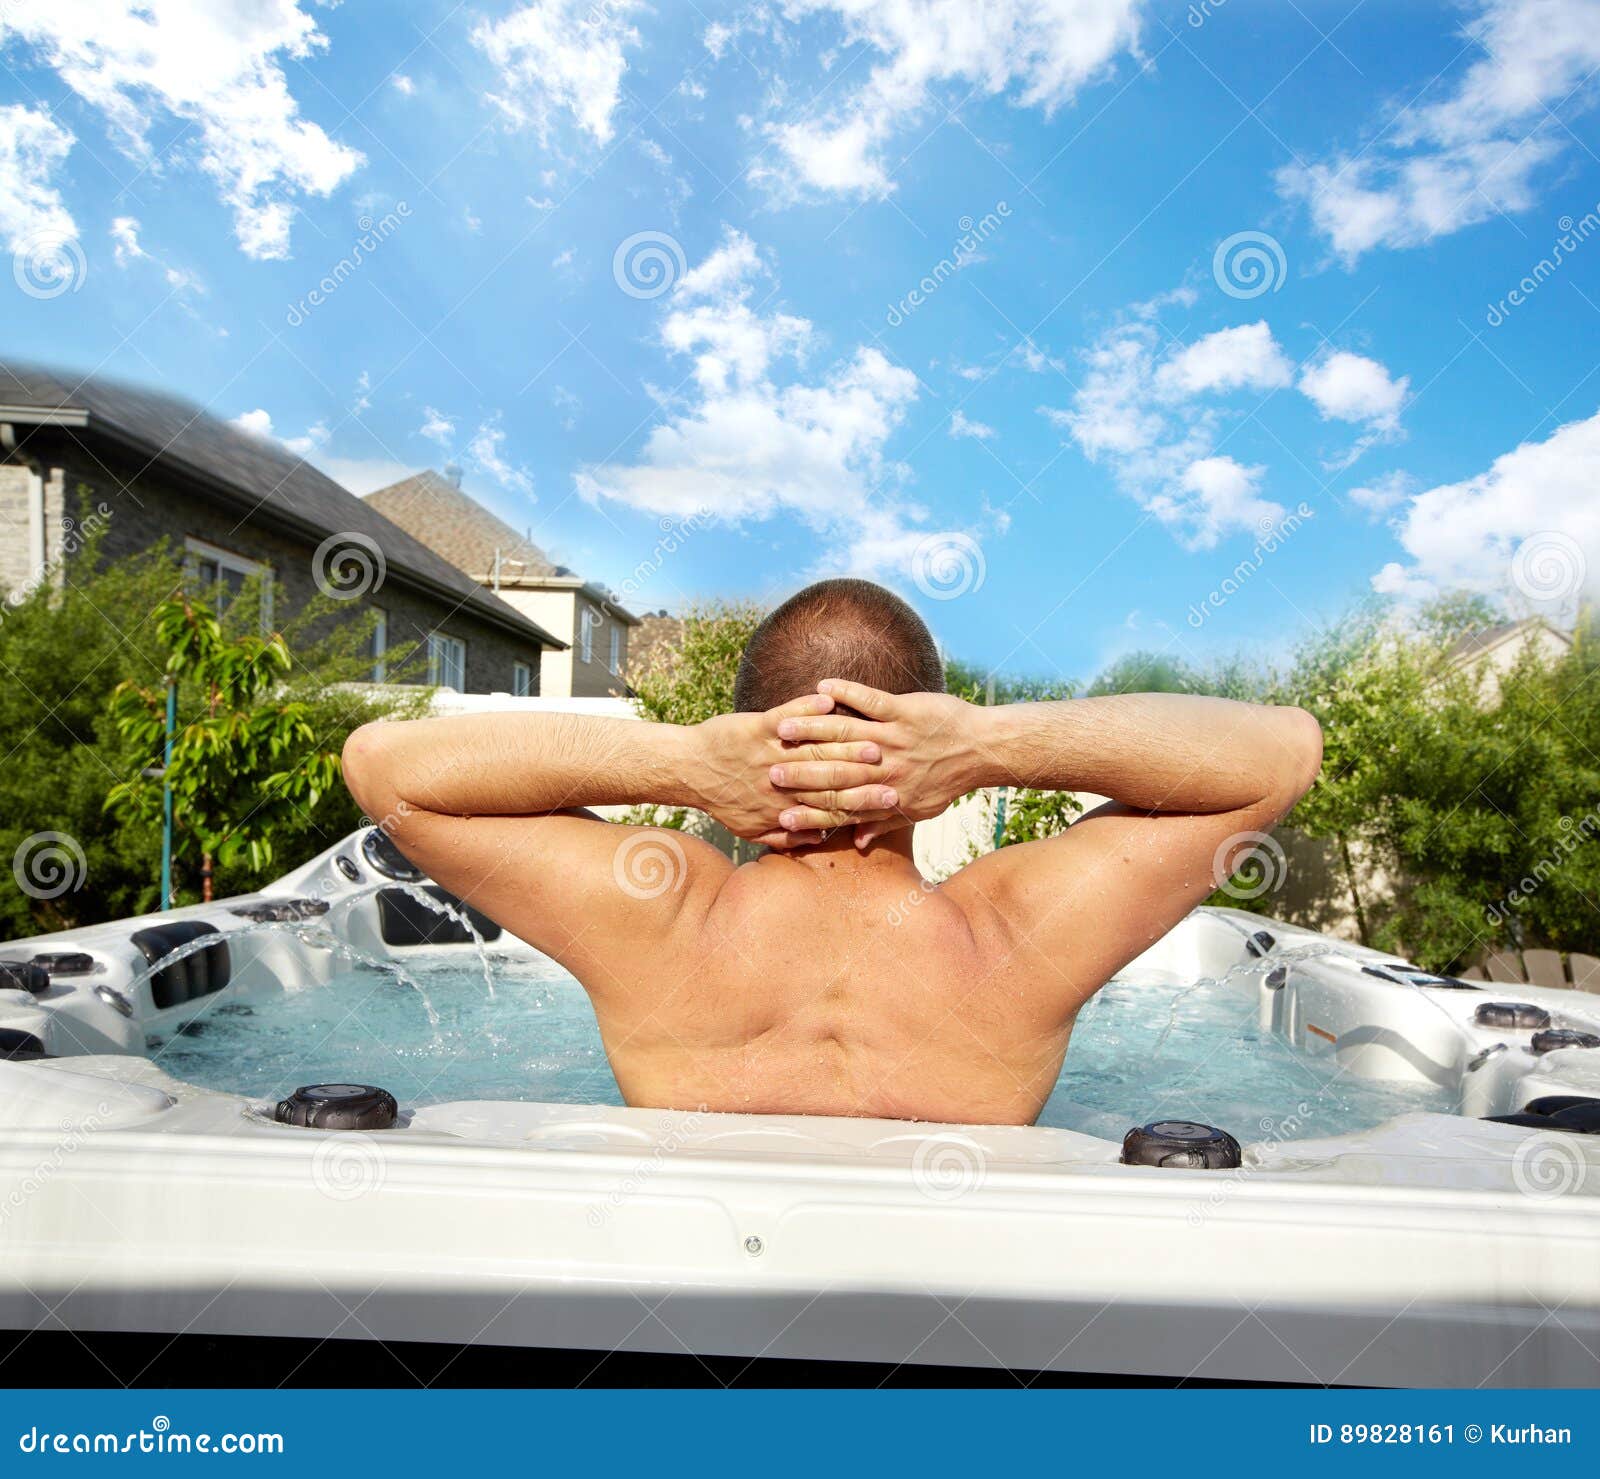 man having massage in hot tub spa.